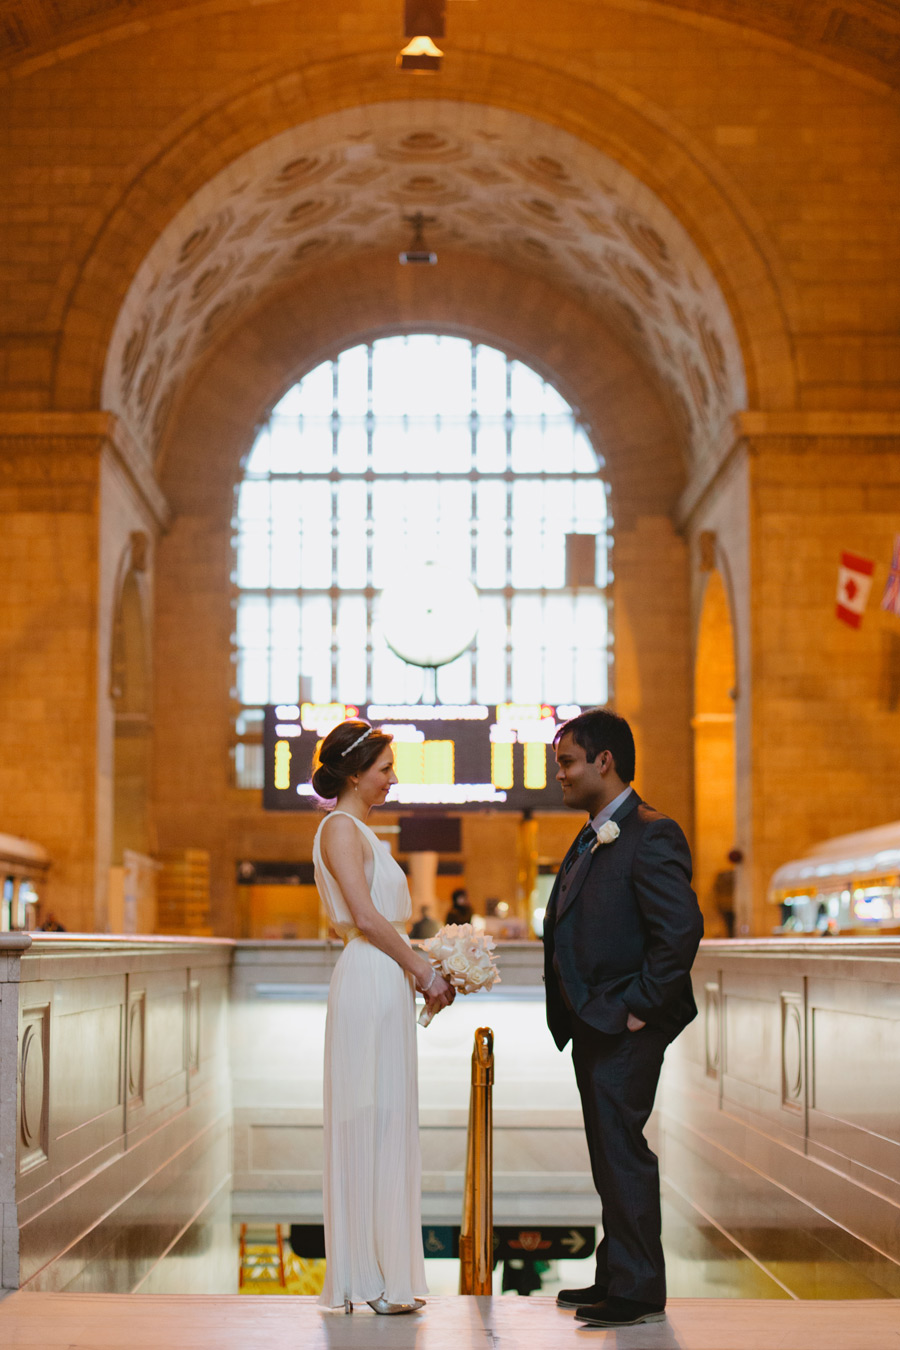 Union station wedding photos